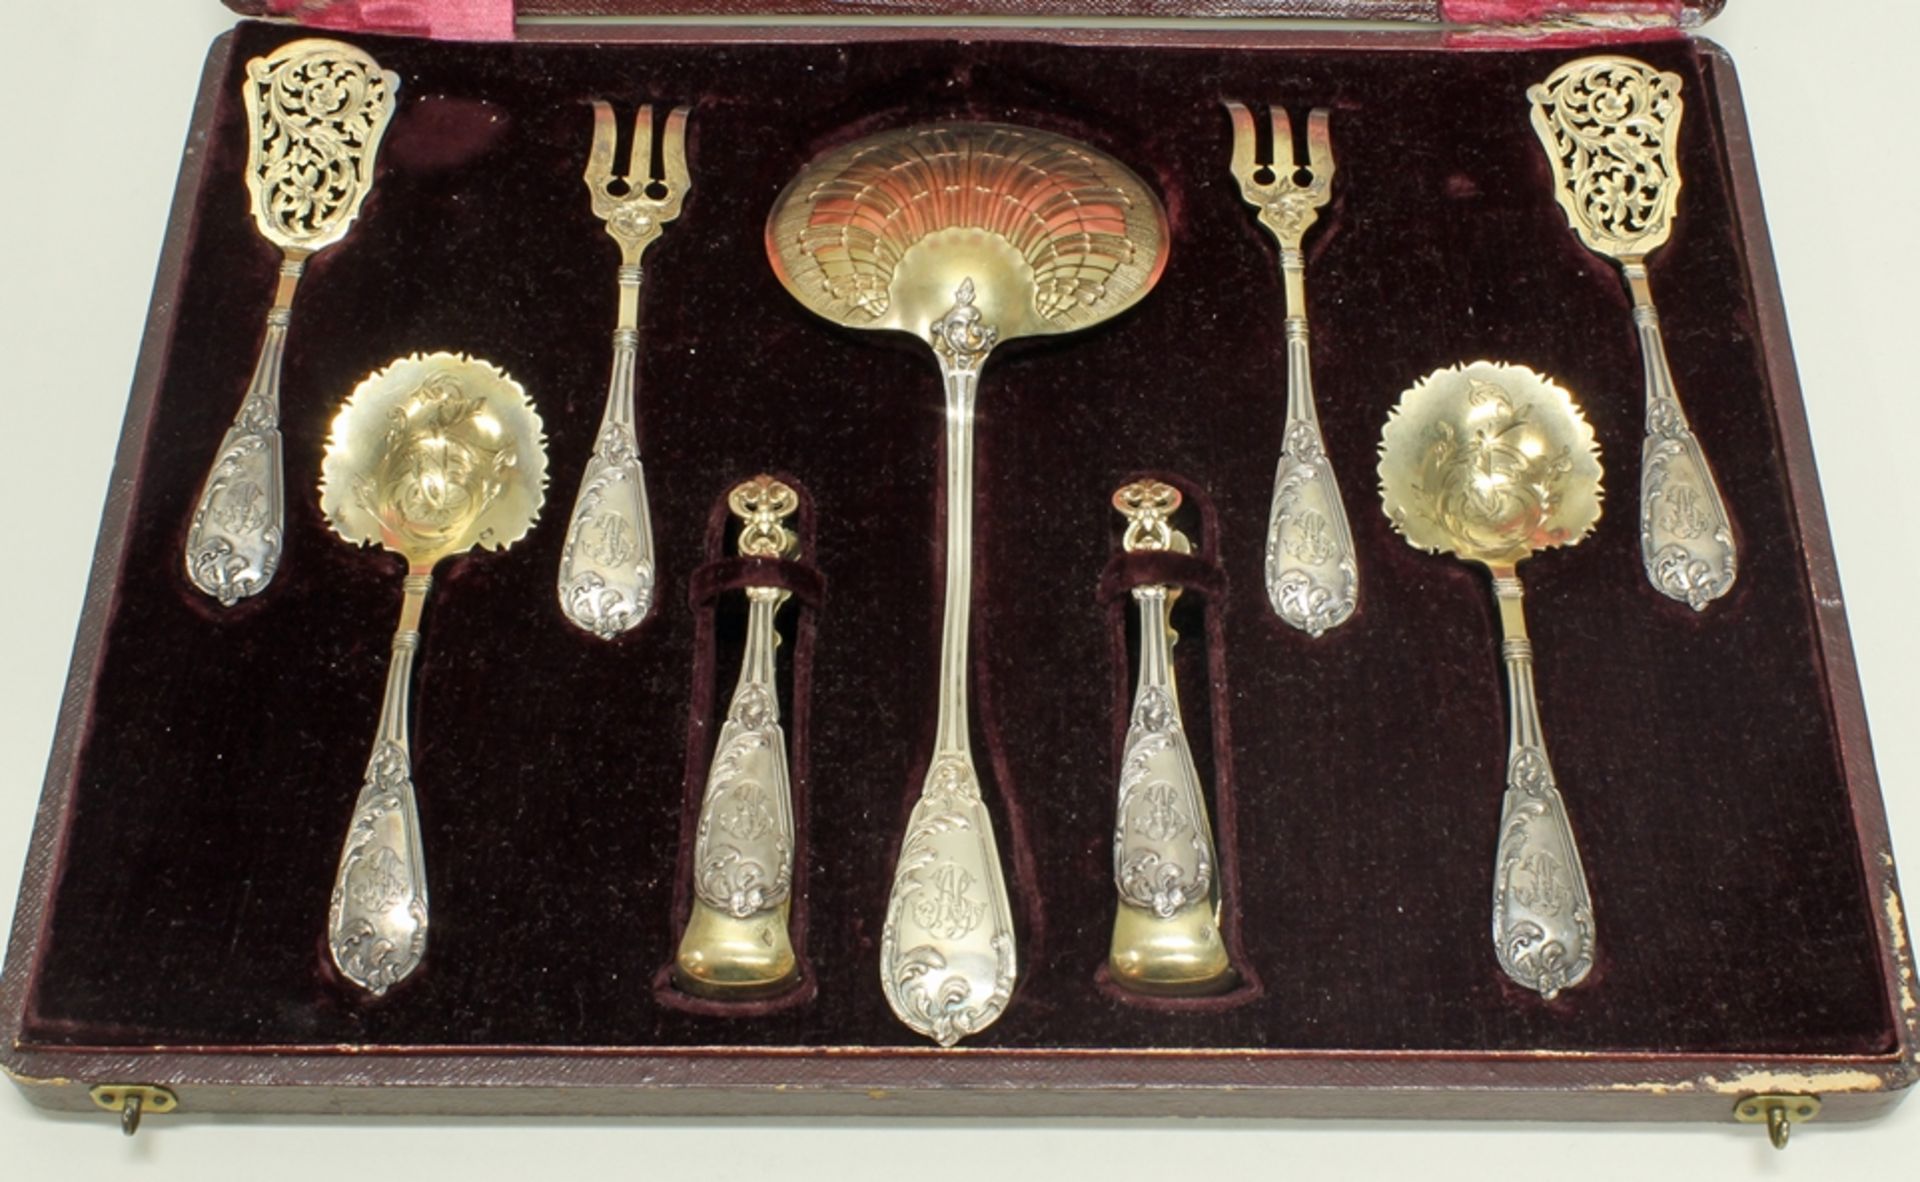 Erdbeerbesteck, 9-tlg., Silber 950, Paris, L. Béguin & L. Lapar, teils vergoldet, gravierte Monogra - Bild 2 aus 3